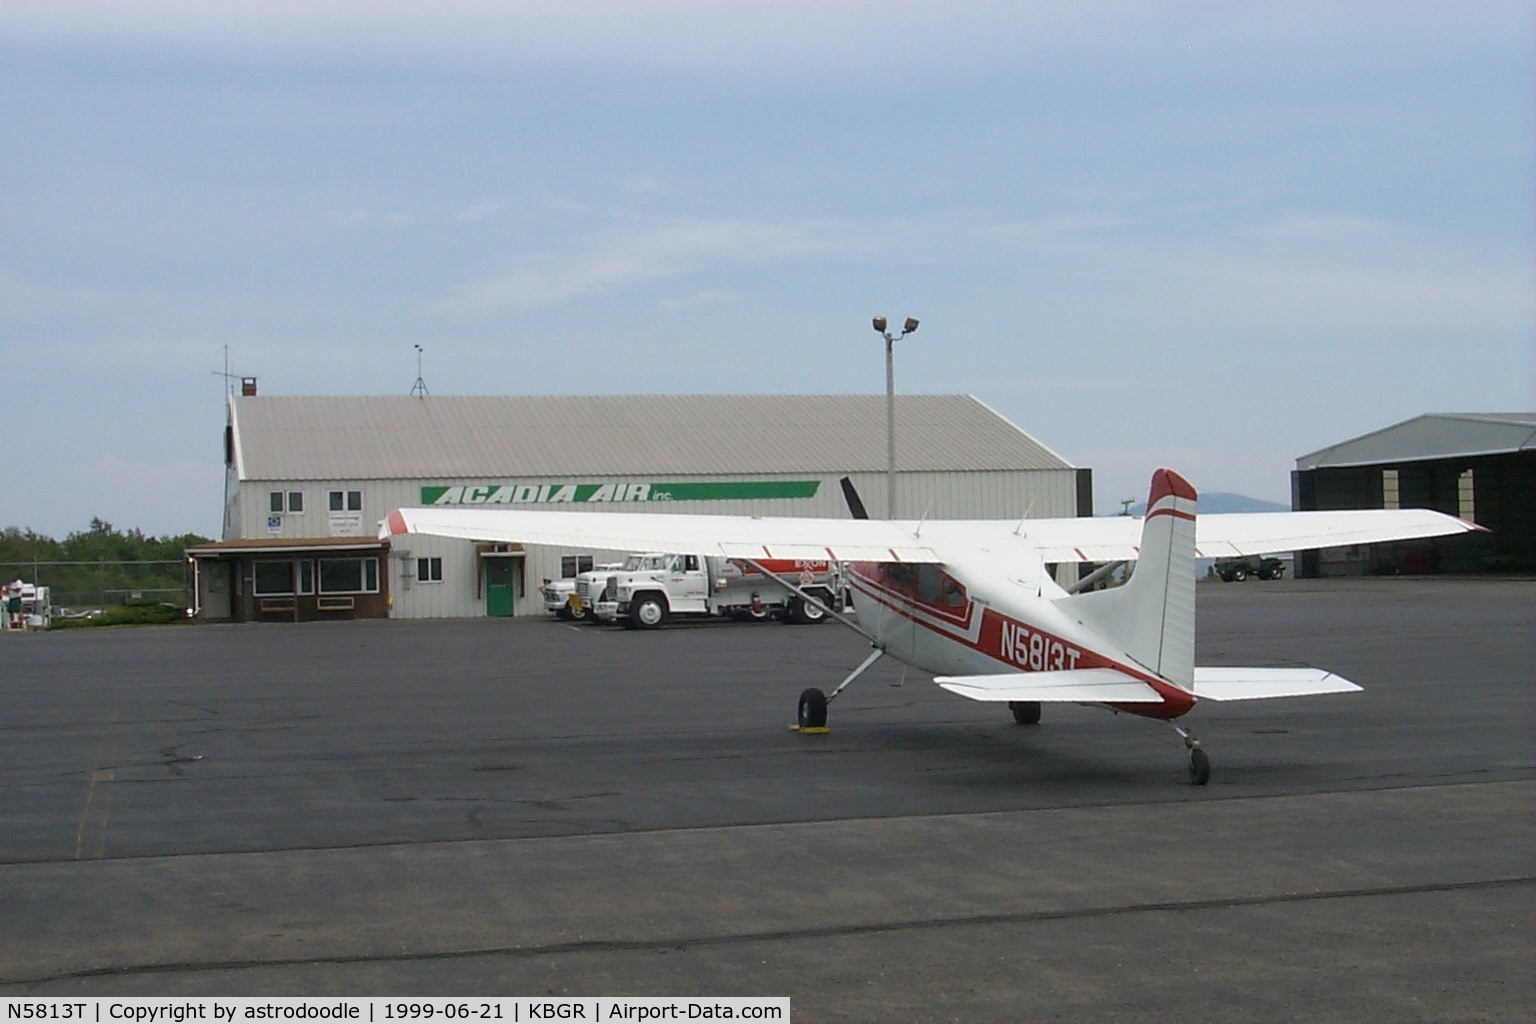 N5813T, 1964 Cessna 185C Skywagon C/N 185-0713, The Tomato - On the Ramp at Telford Aviation, Bangor, Maine